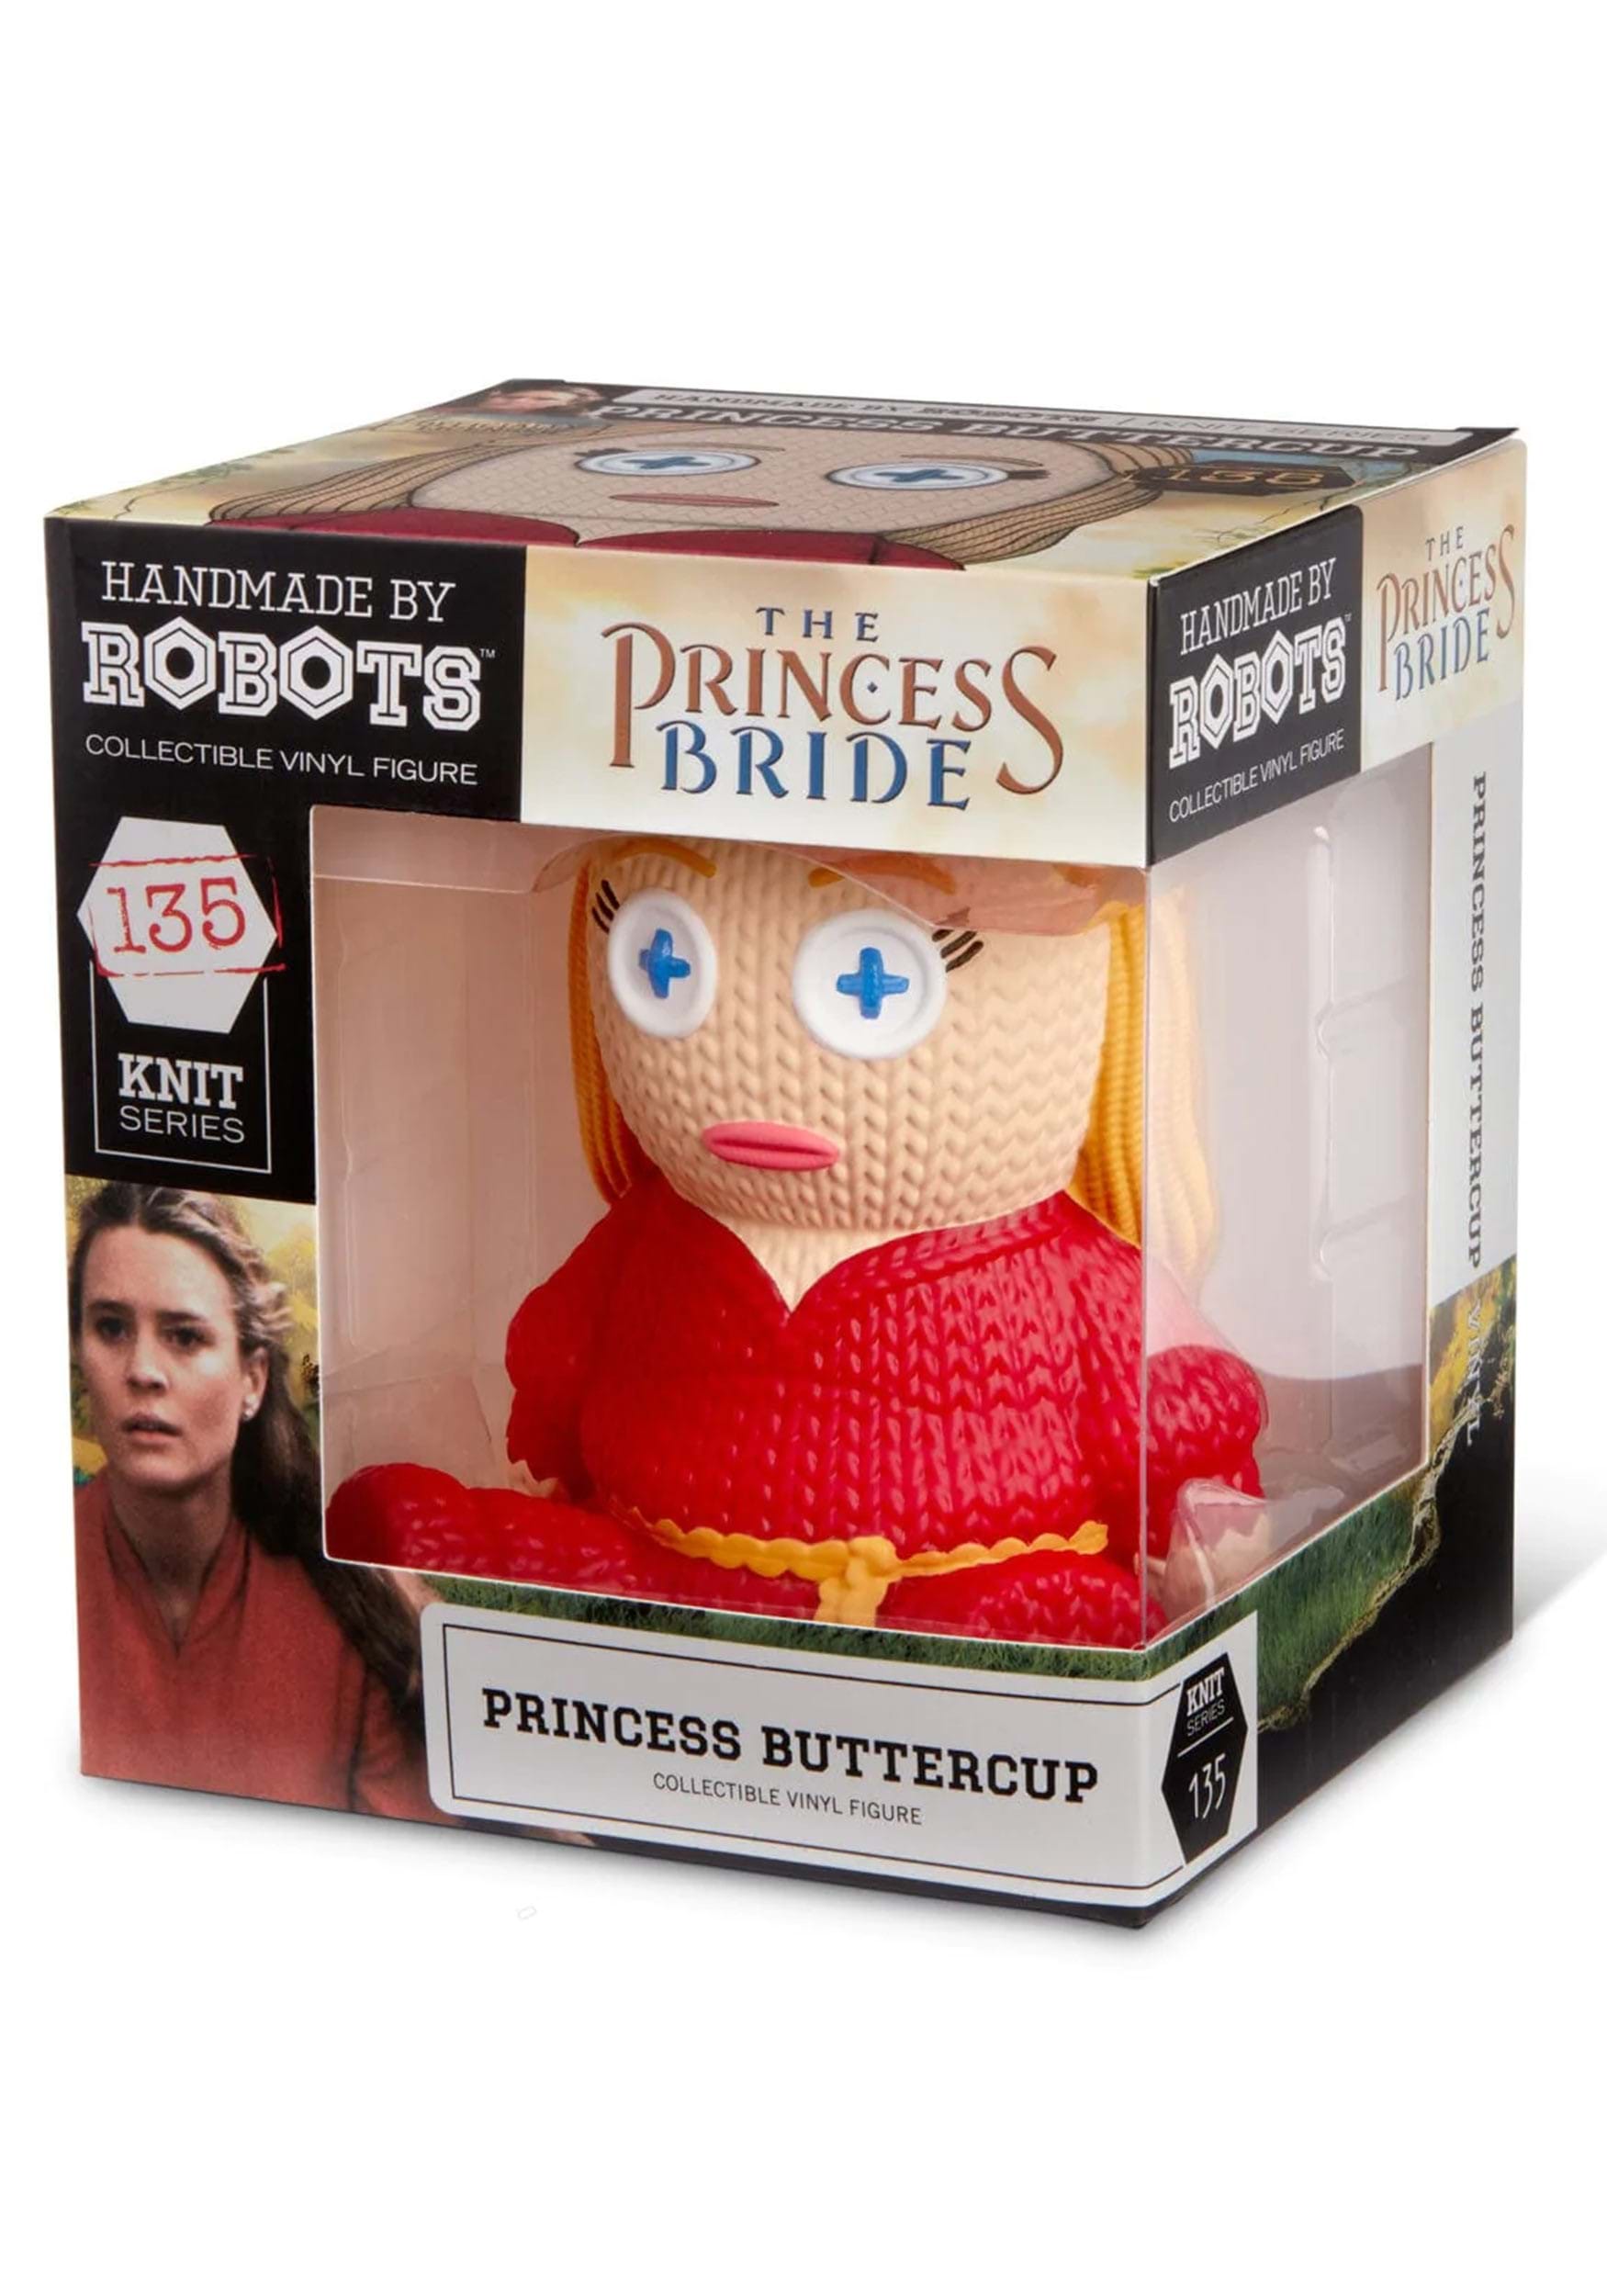 The Princess Bride Handmade By Robots Buttercup Figure